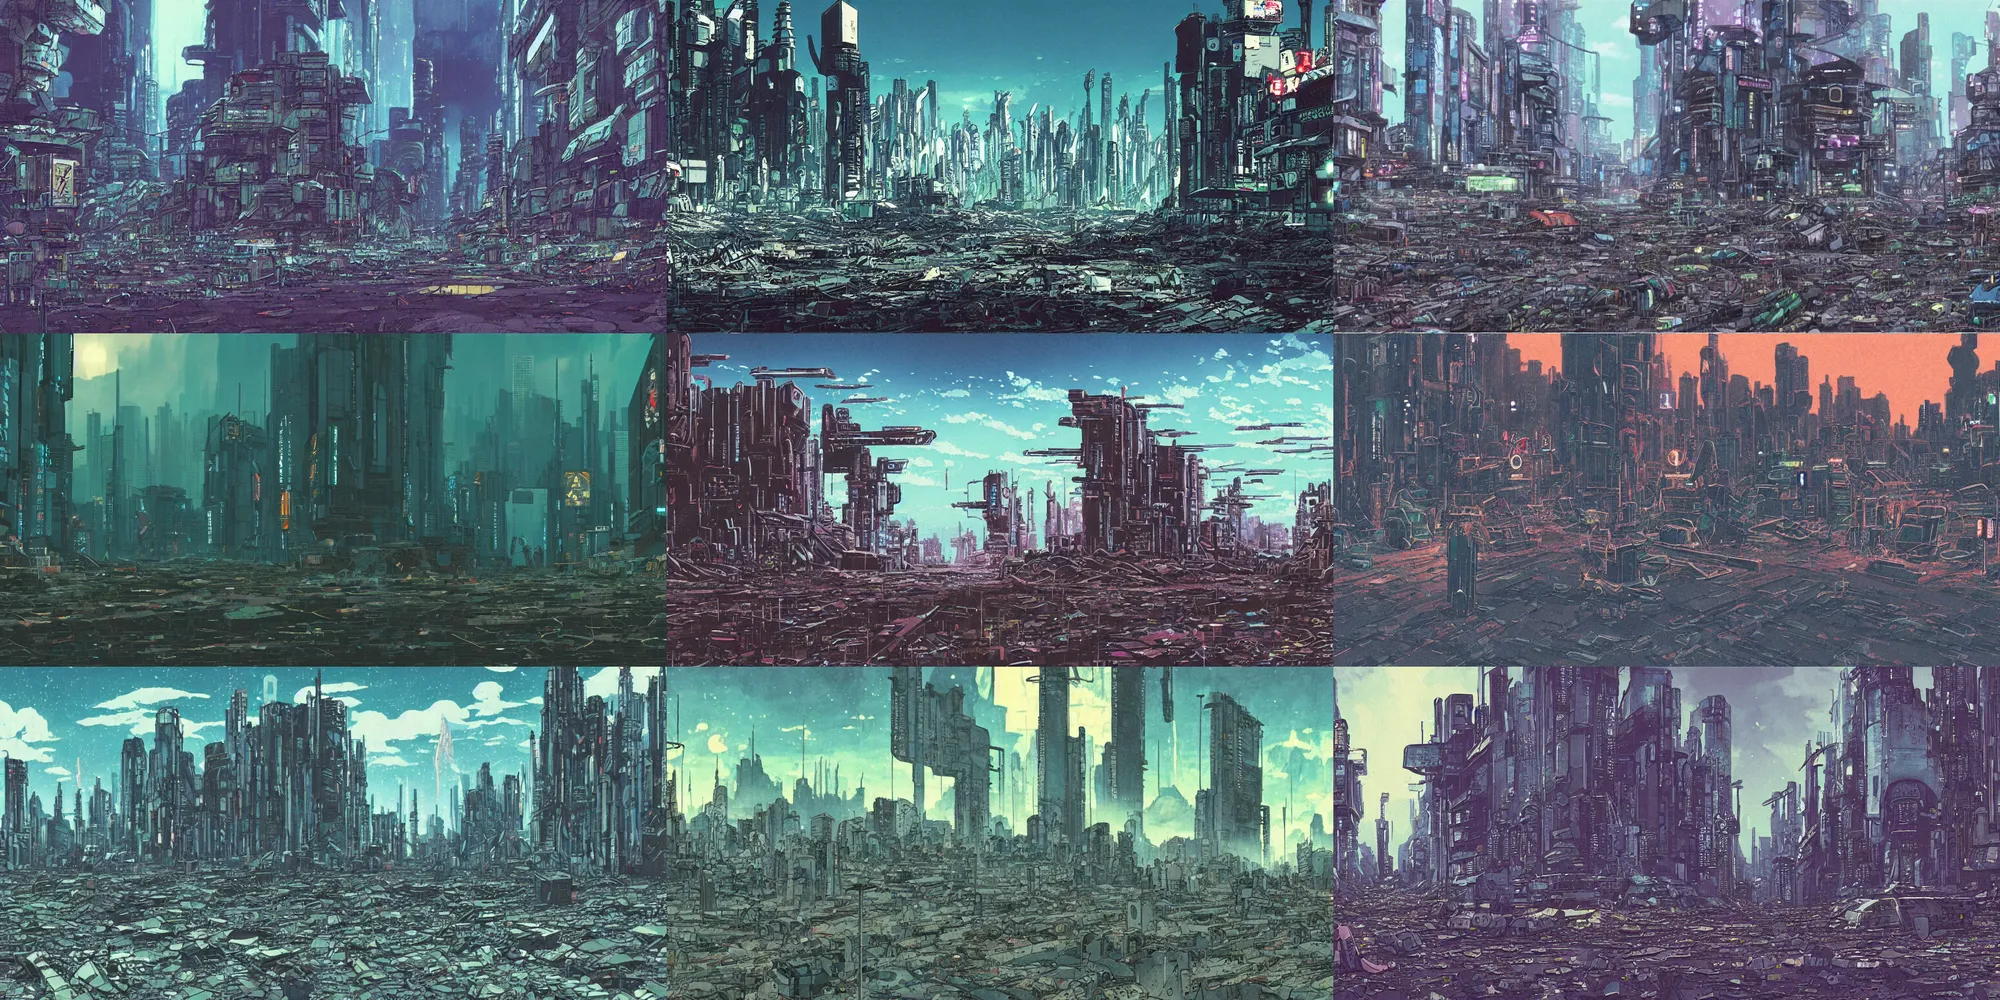 Prompt: a desolate cyberpunk landscape with debris, by studio ghibli